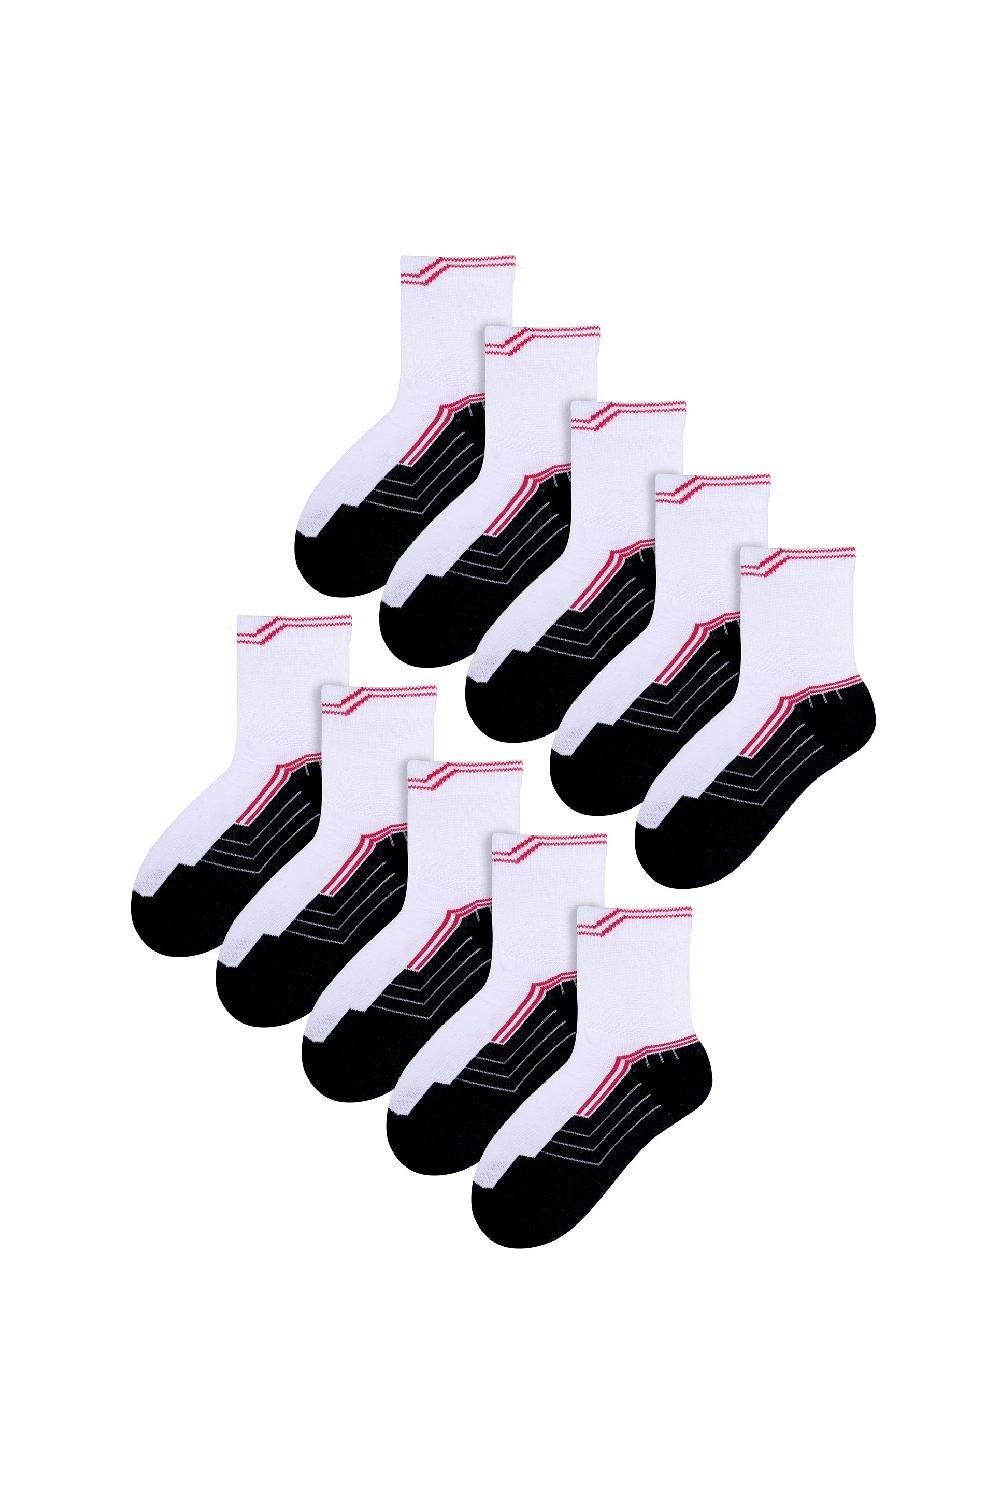 10 Pairs Cushioned Low Cut White Sport PE Socks